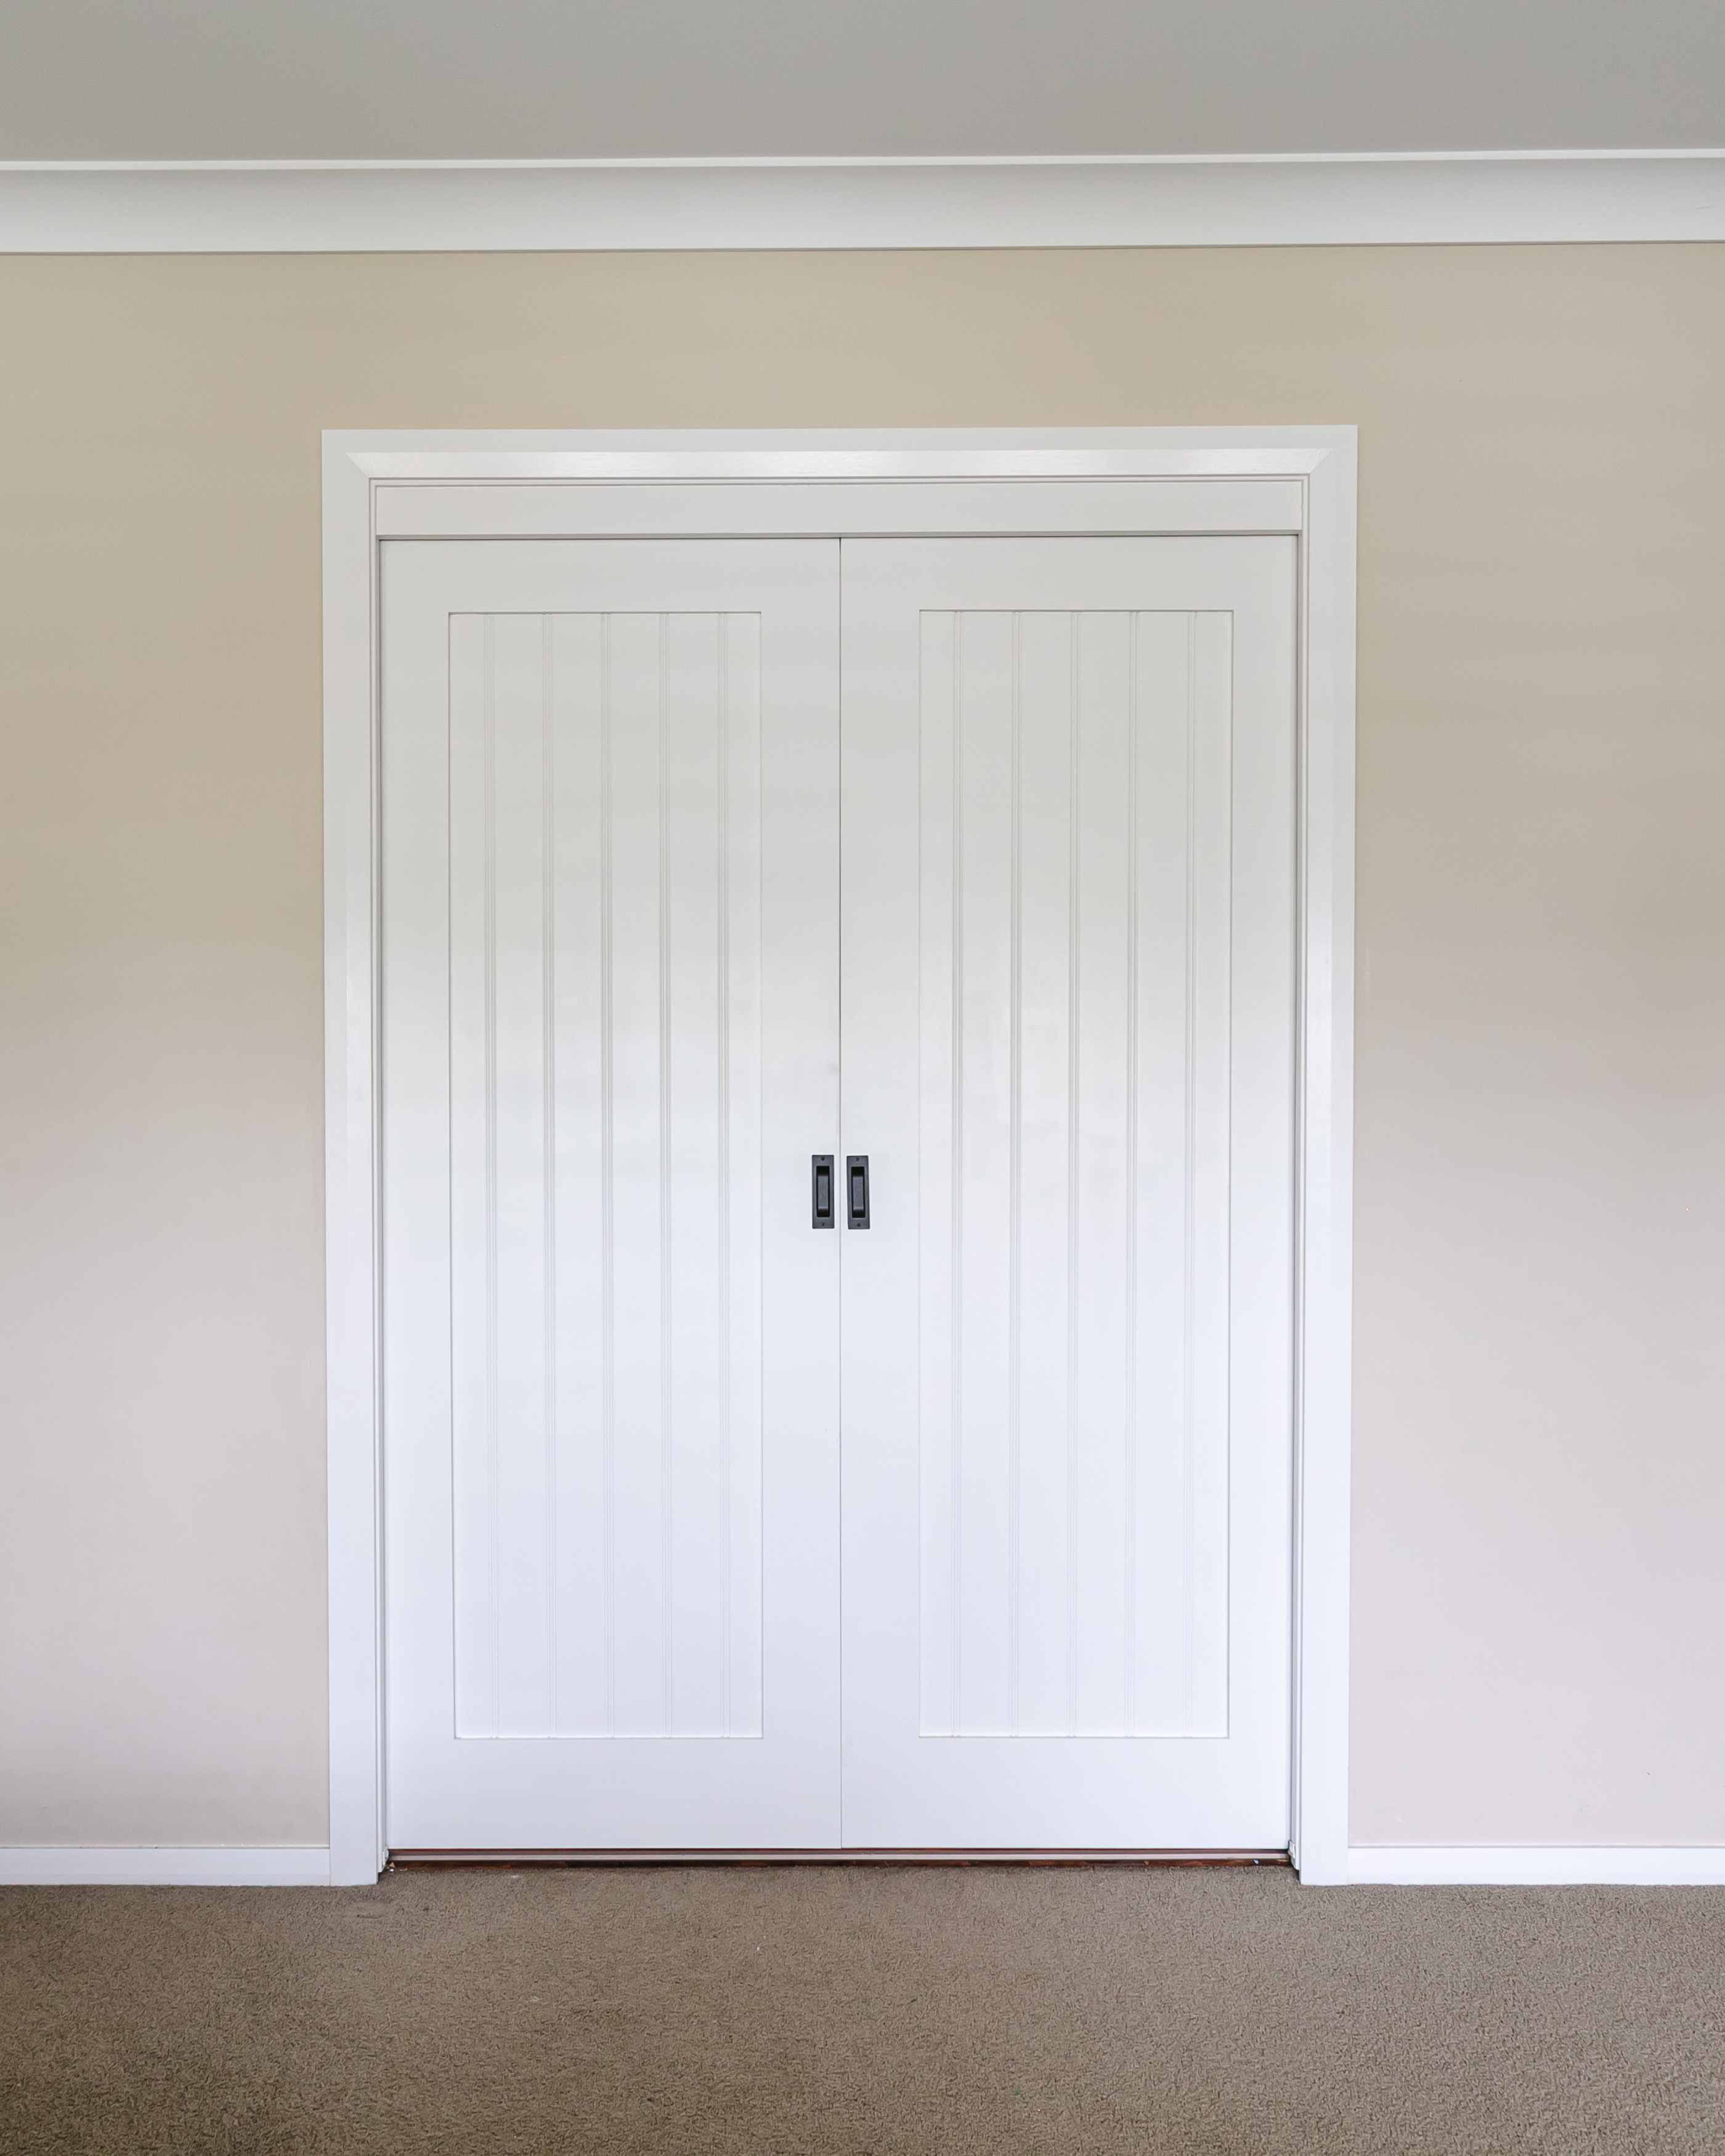 Internal sliding double door in white colour